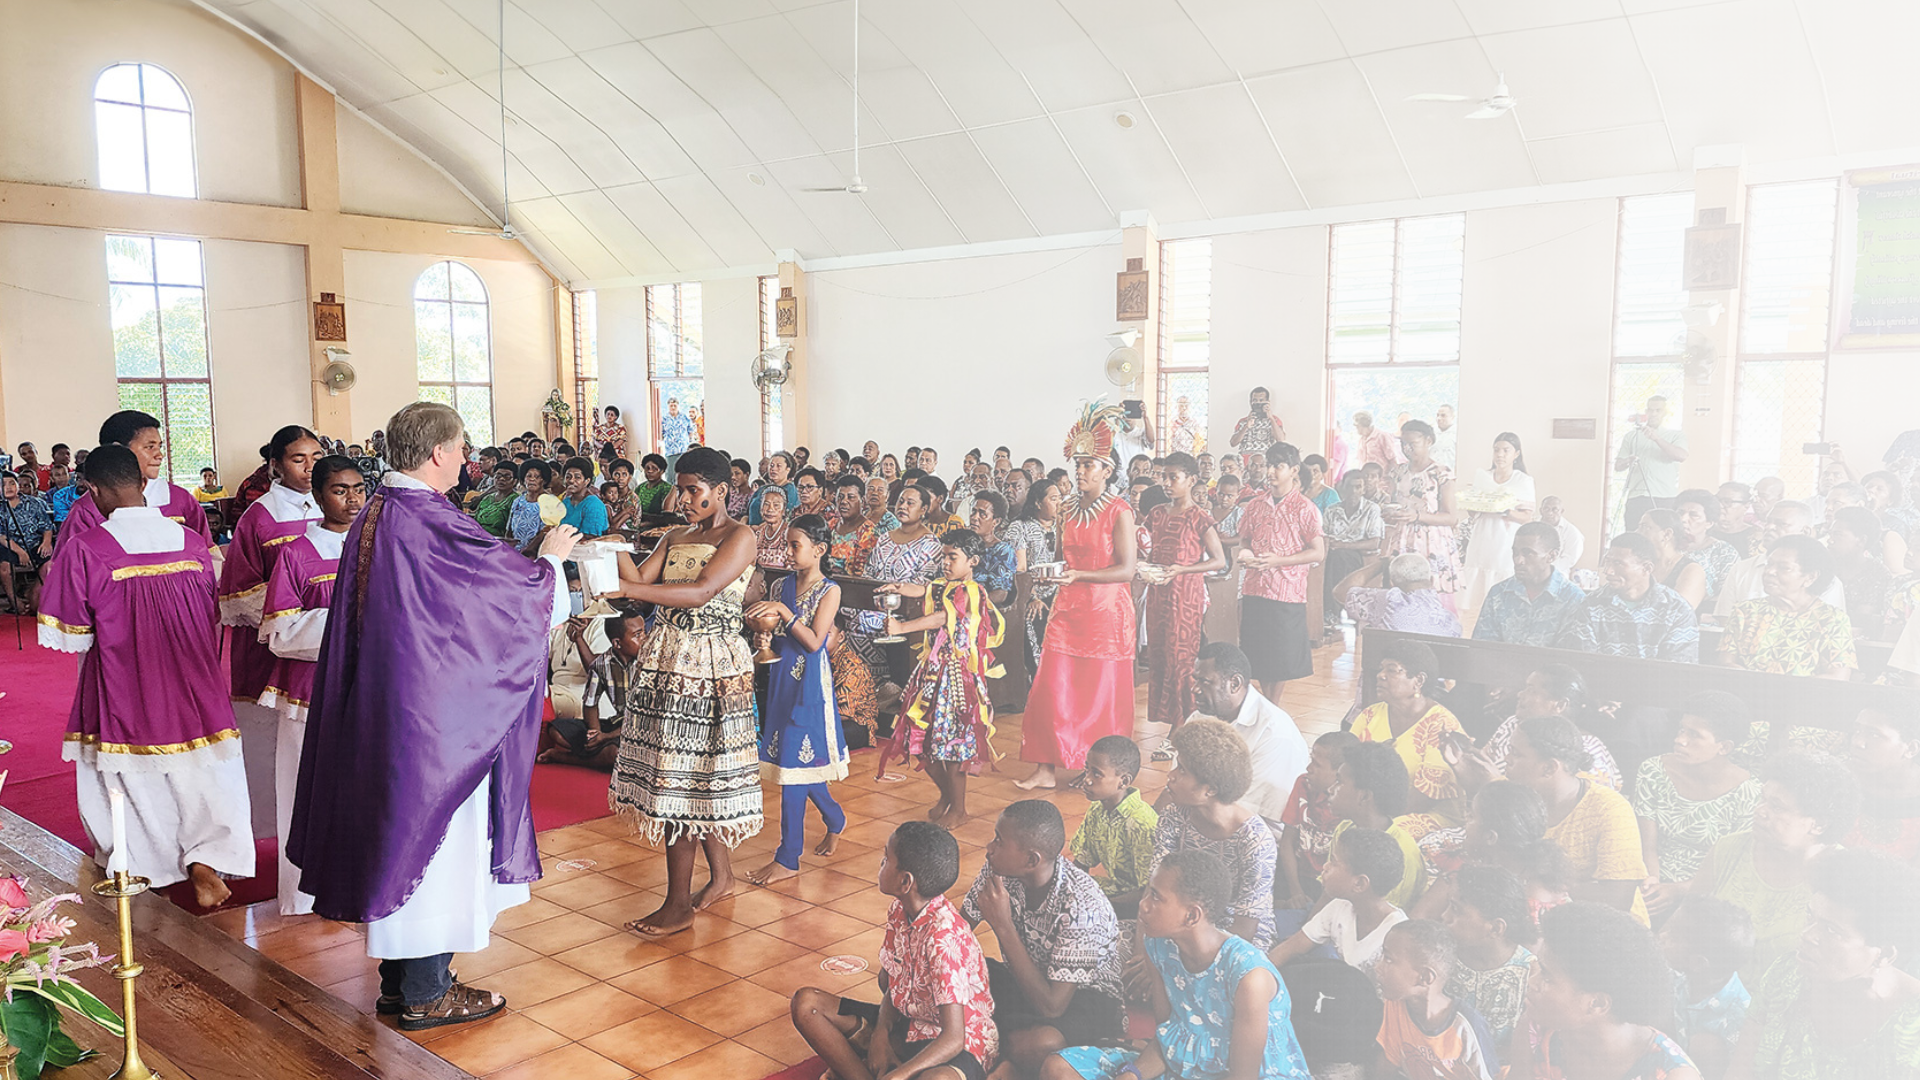 HERO A celebration to mark the end of the Columban era at Christ the King parish in Ba, Fiji